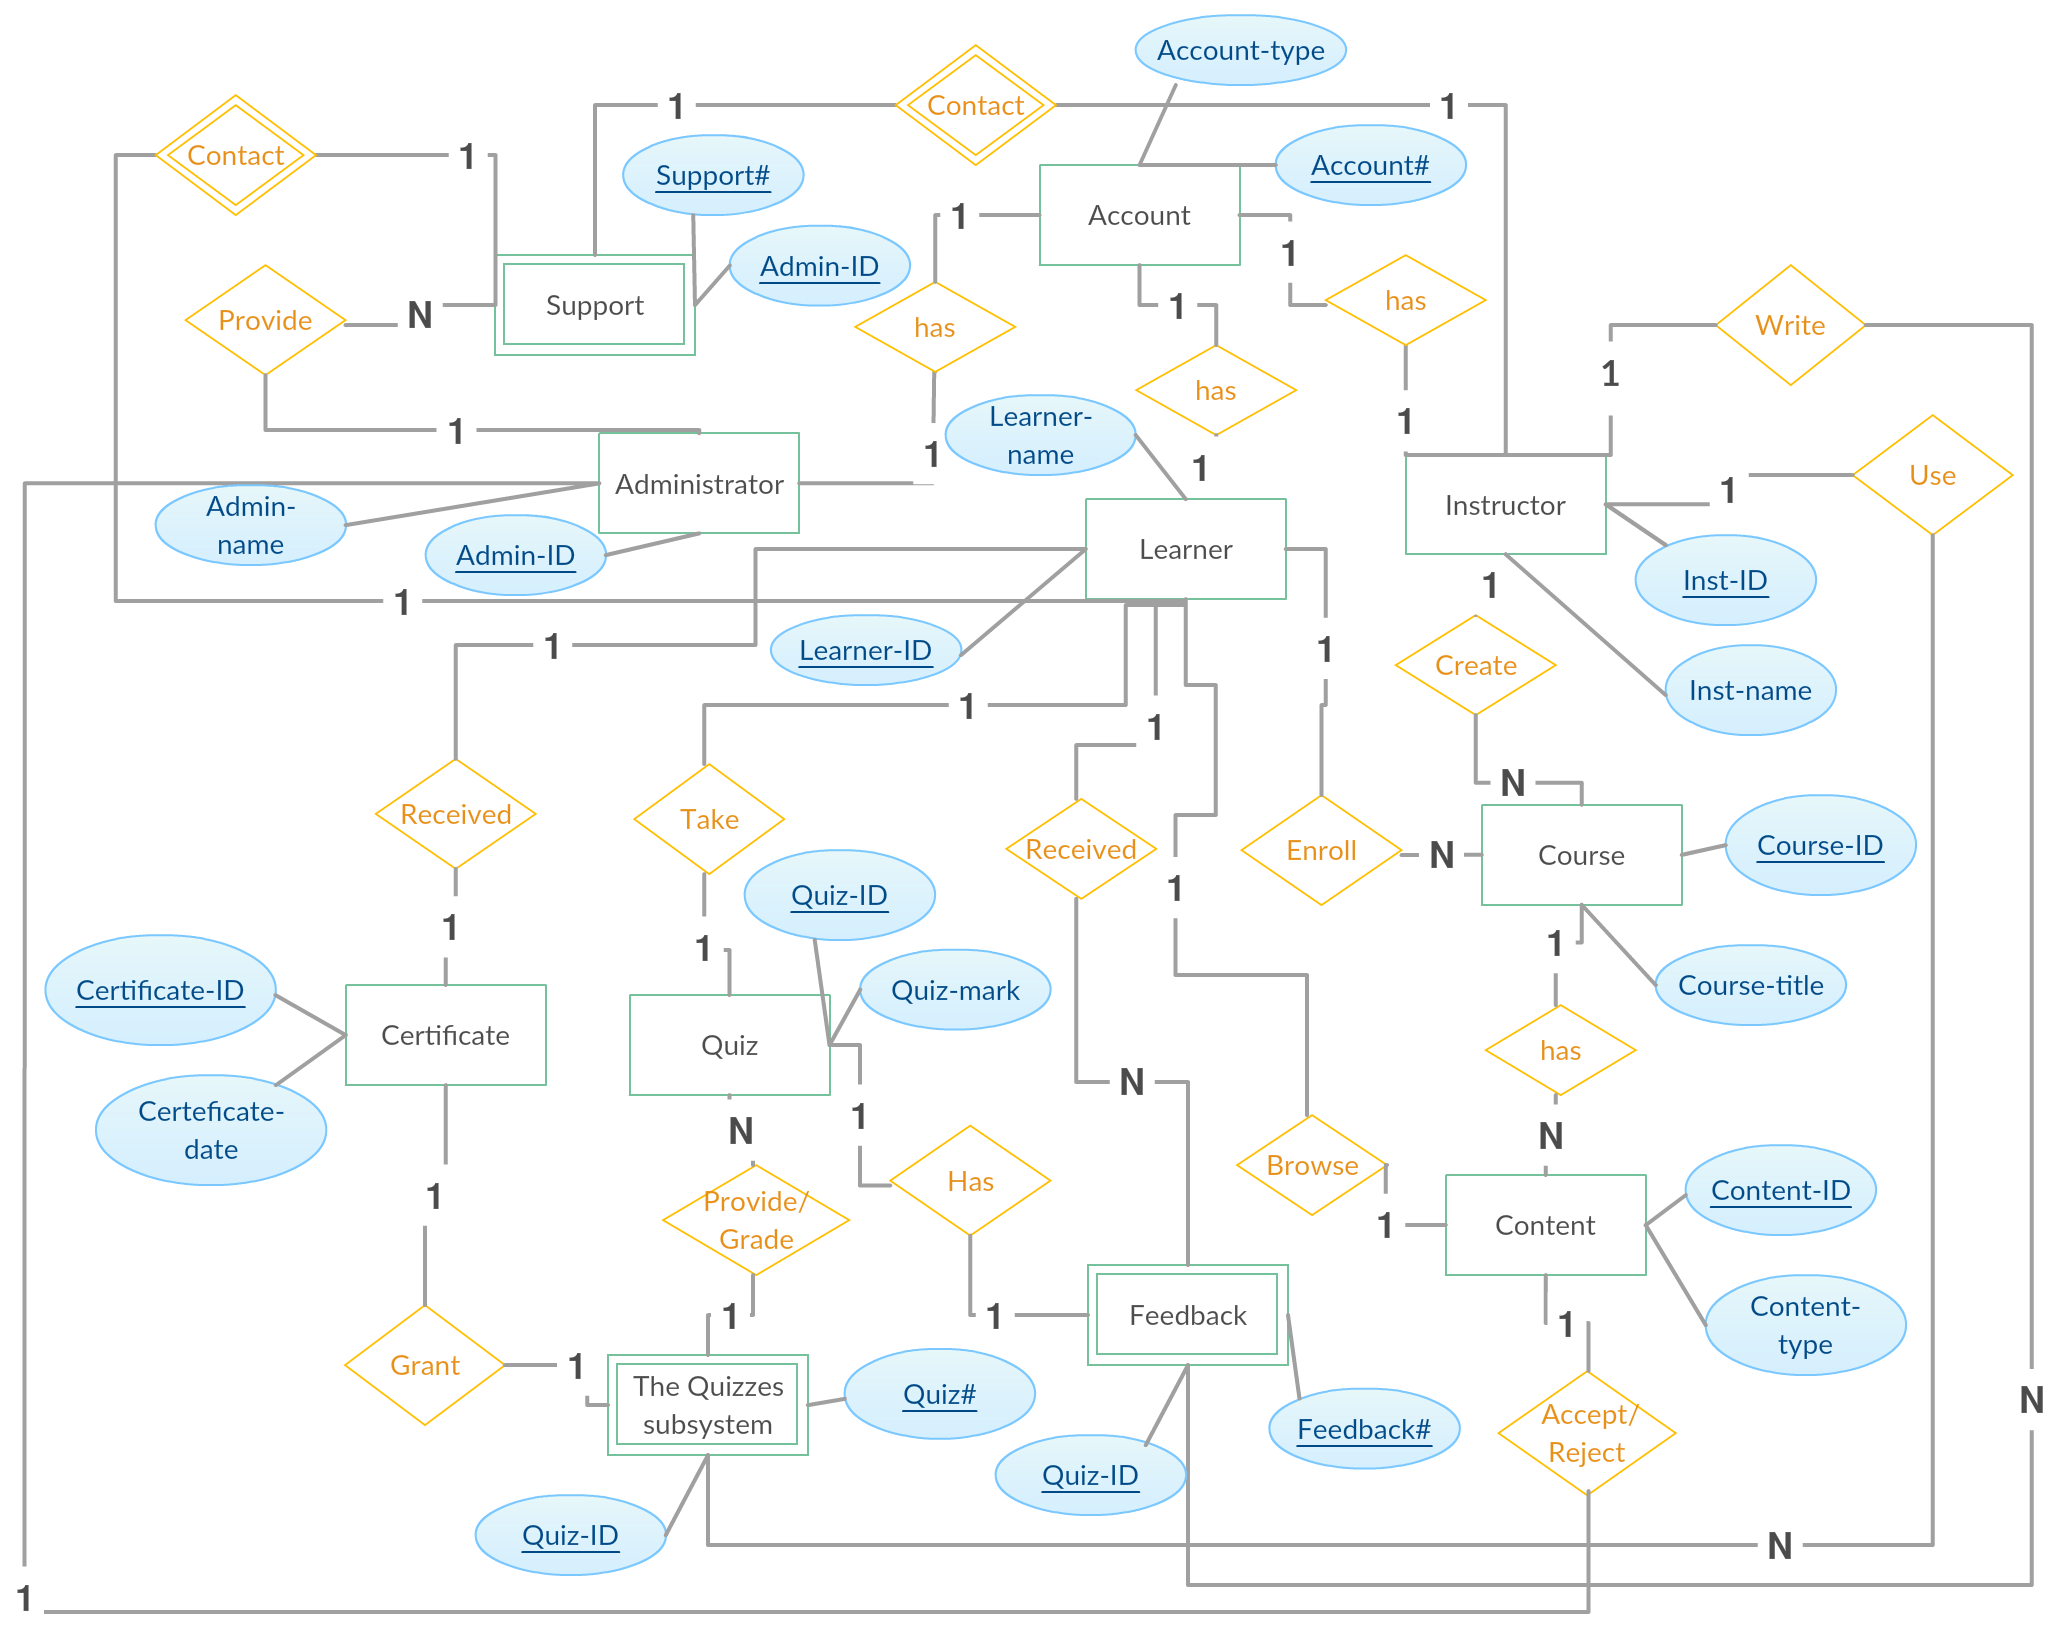 Entity Relationship Diagram (Er Diagram) Of E-Learning